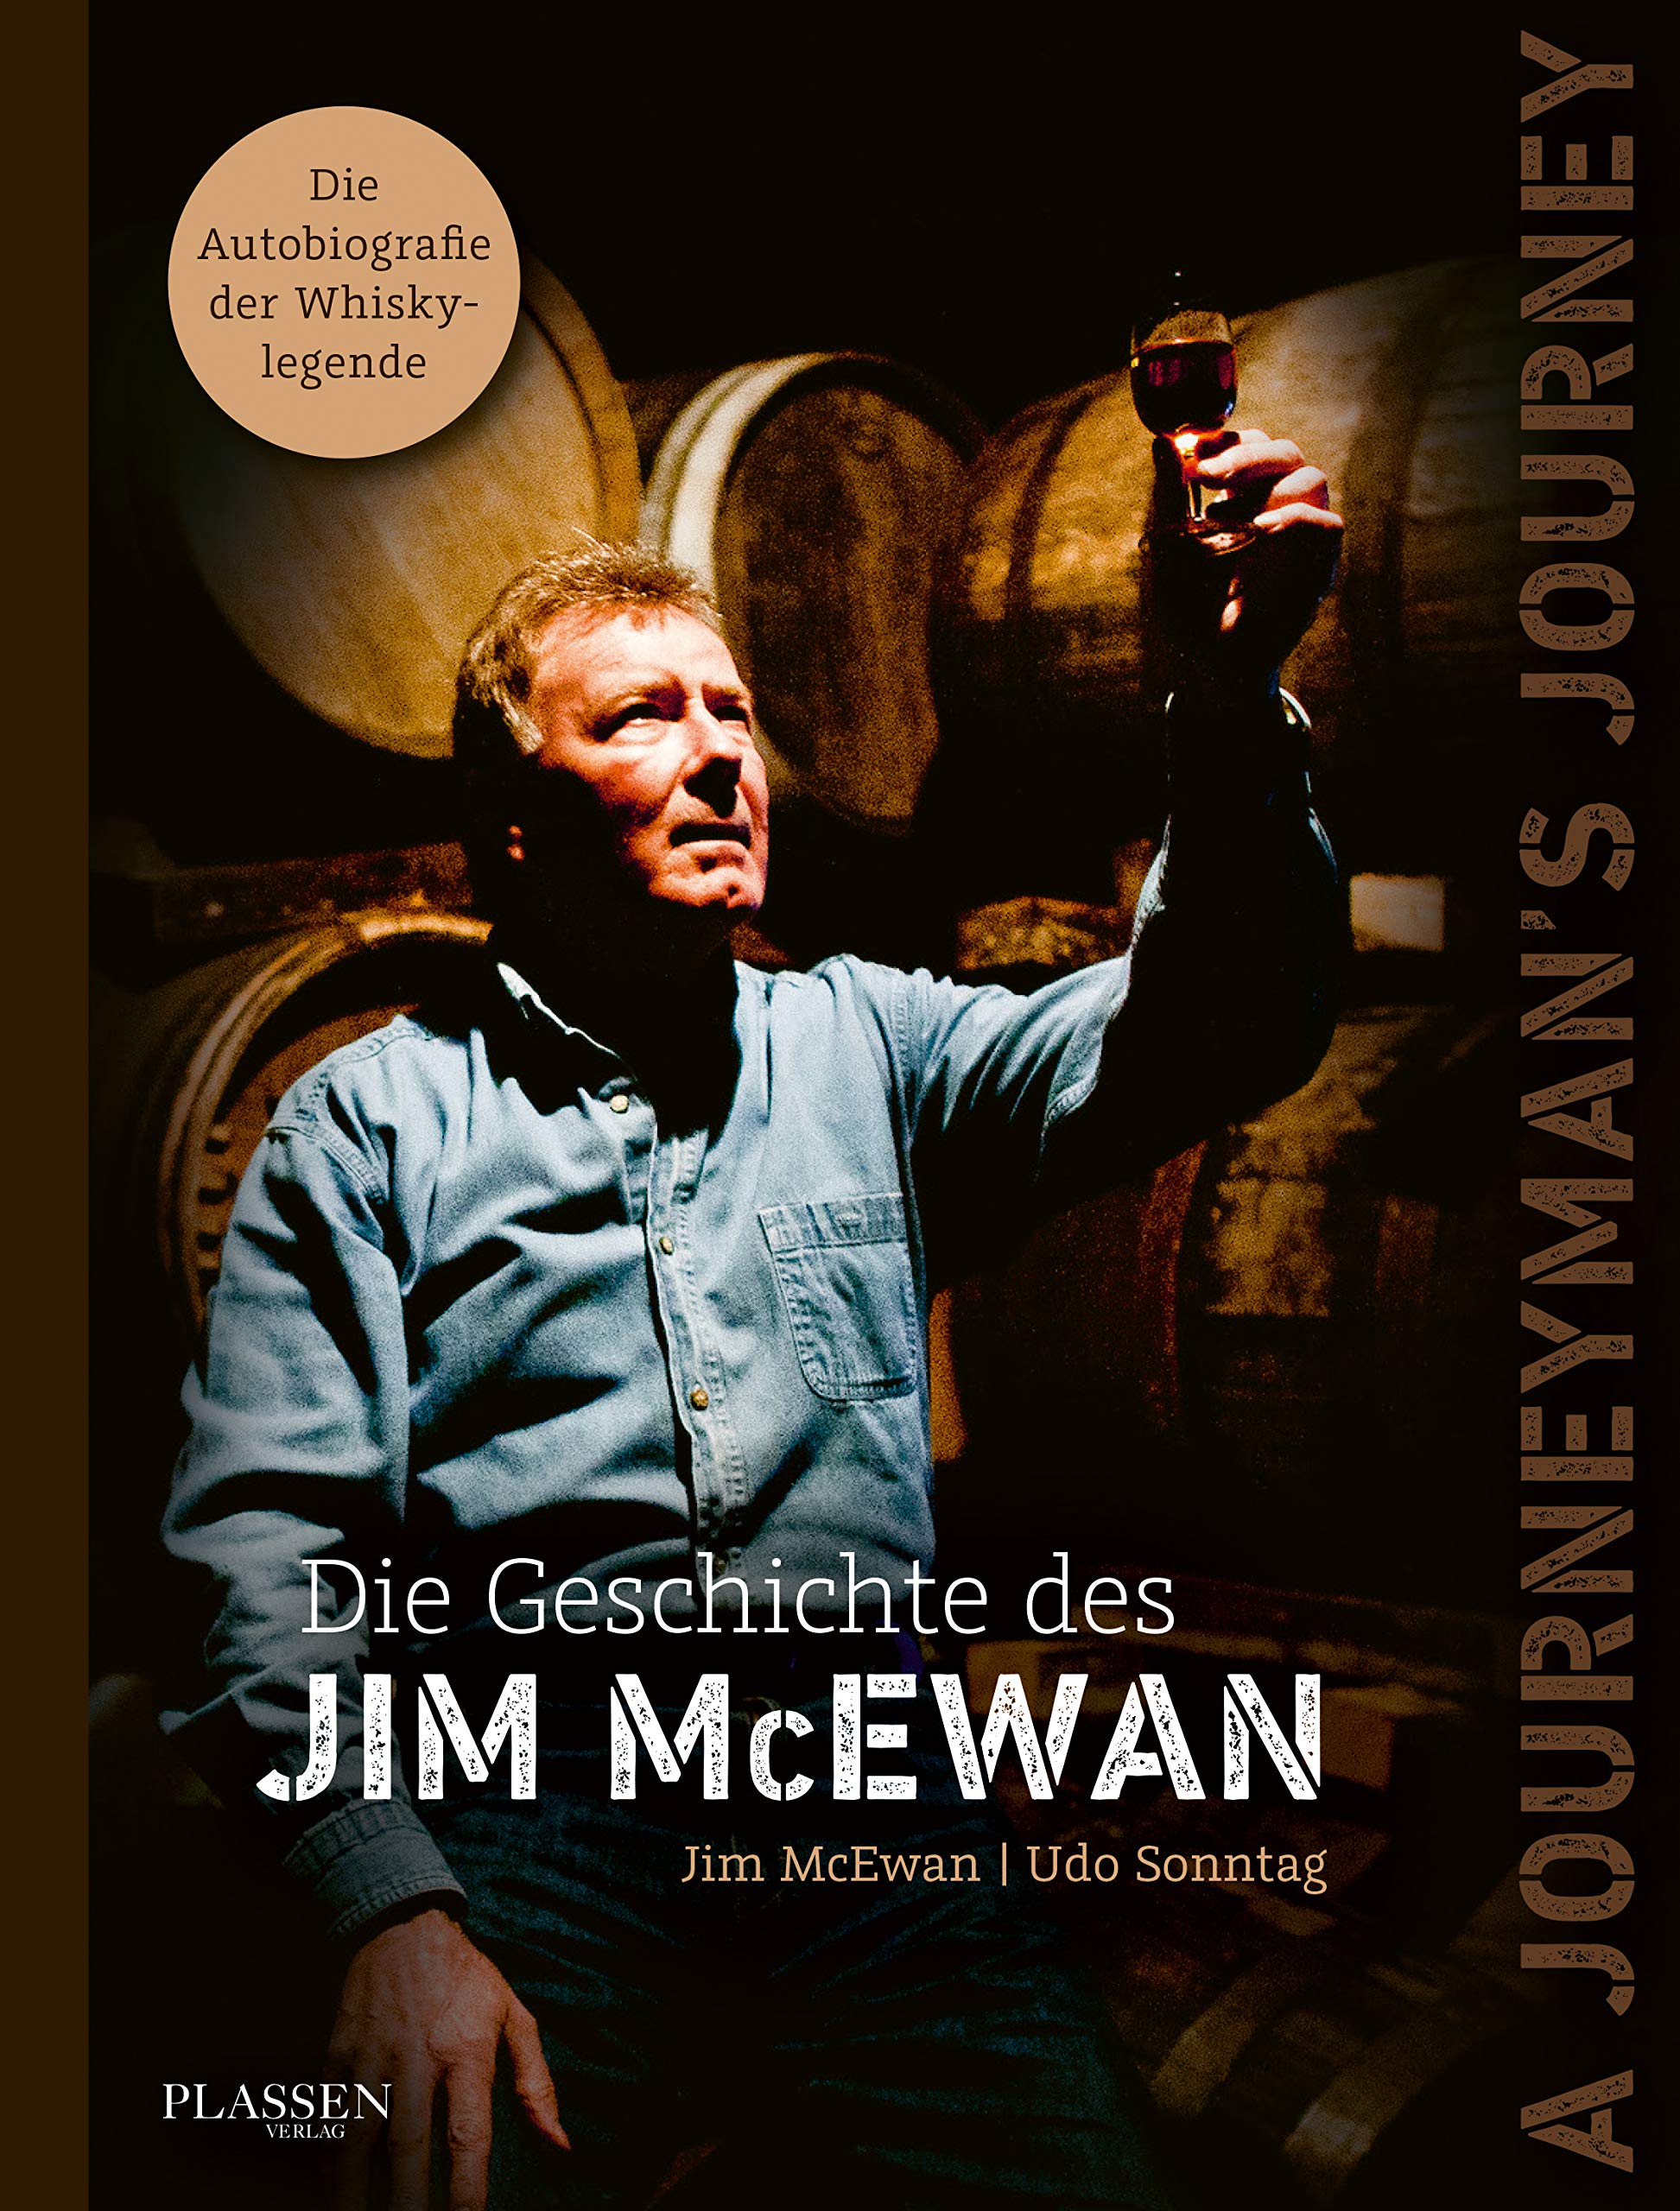 Jim McEwan: 
A Journeyman’s Journey – The Story of Jim McEwan